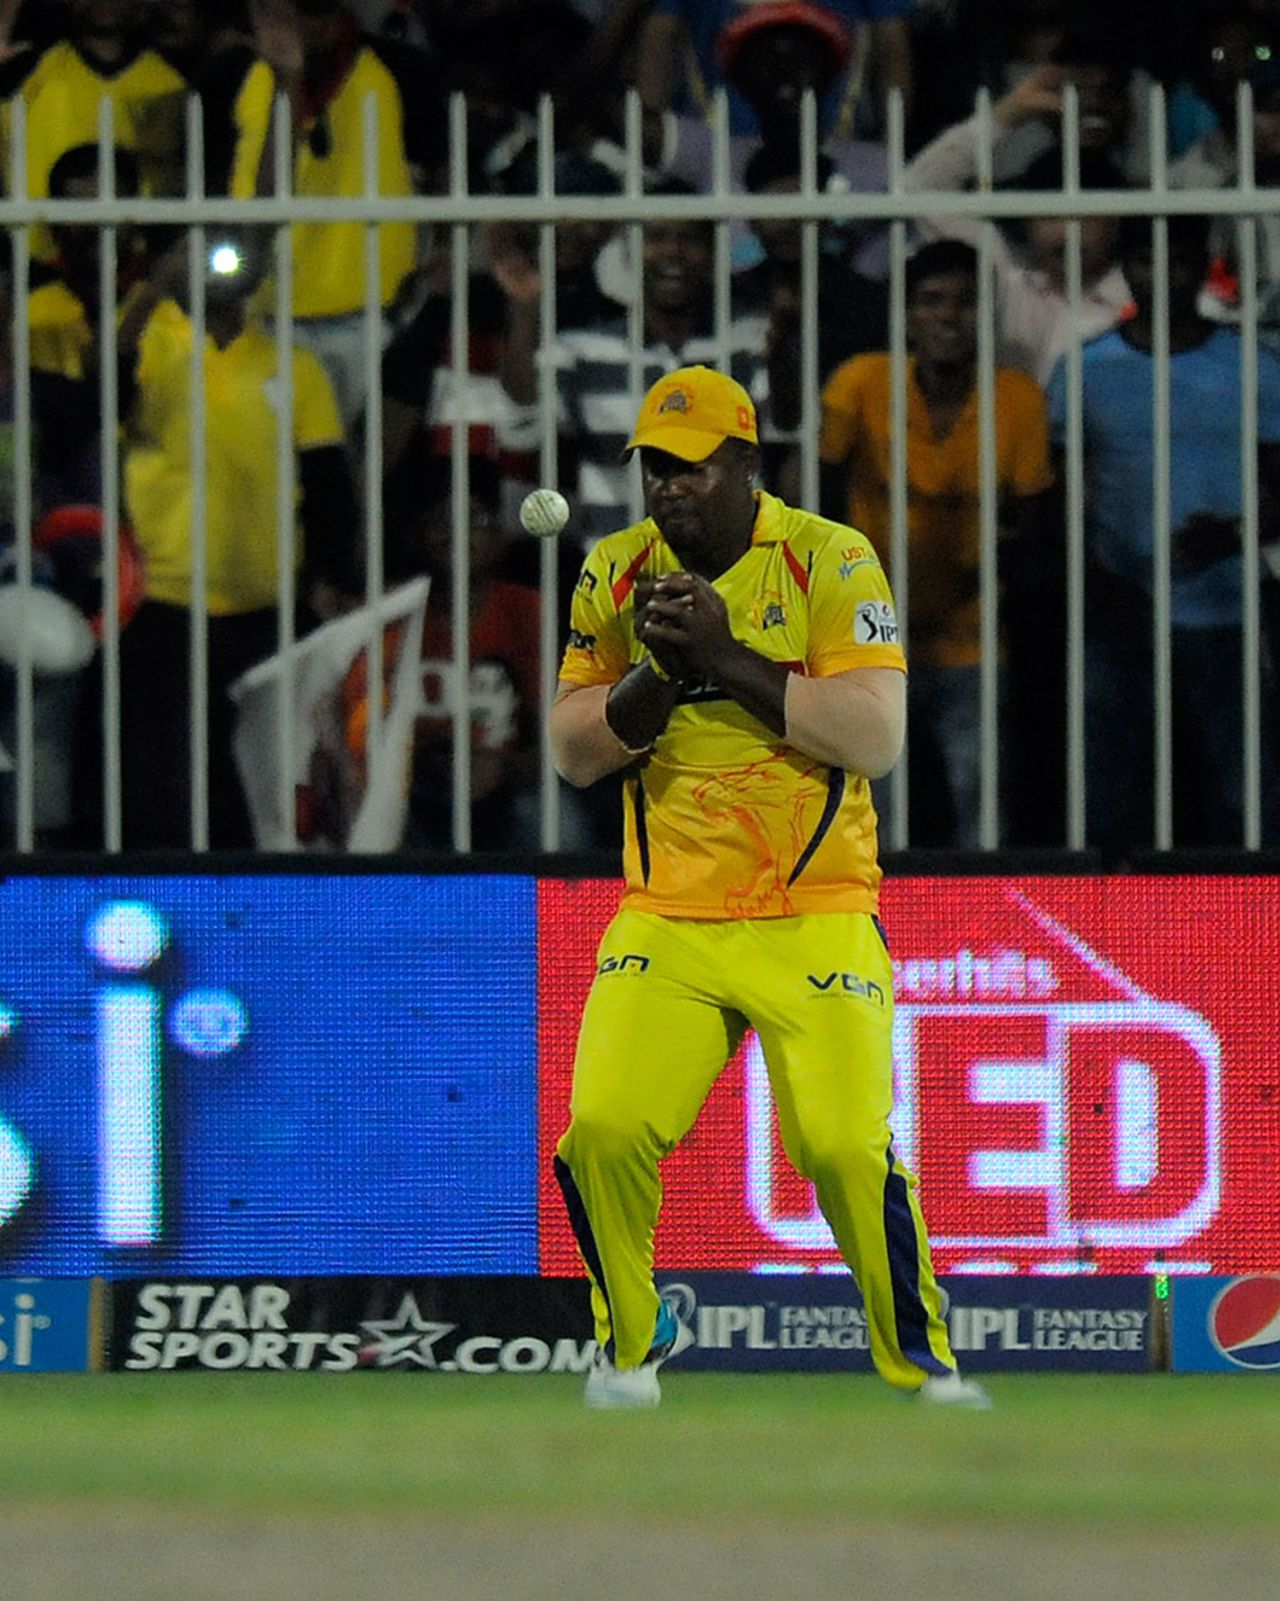 Dwayne Smith puts down a sitter off Karn Sharma, Sunrisers Hyderabad v Chennai Super Kings, IPL 2014, Sharjah, April 27, 2014